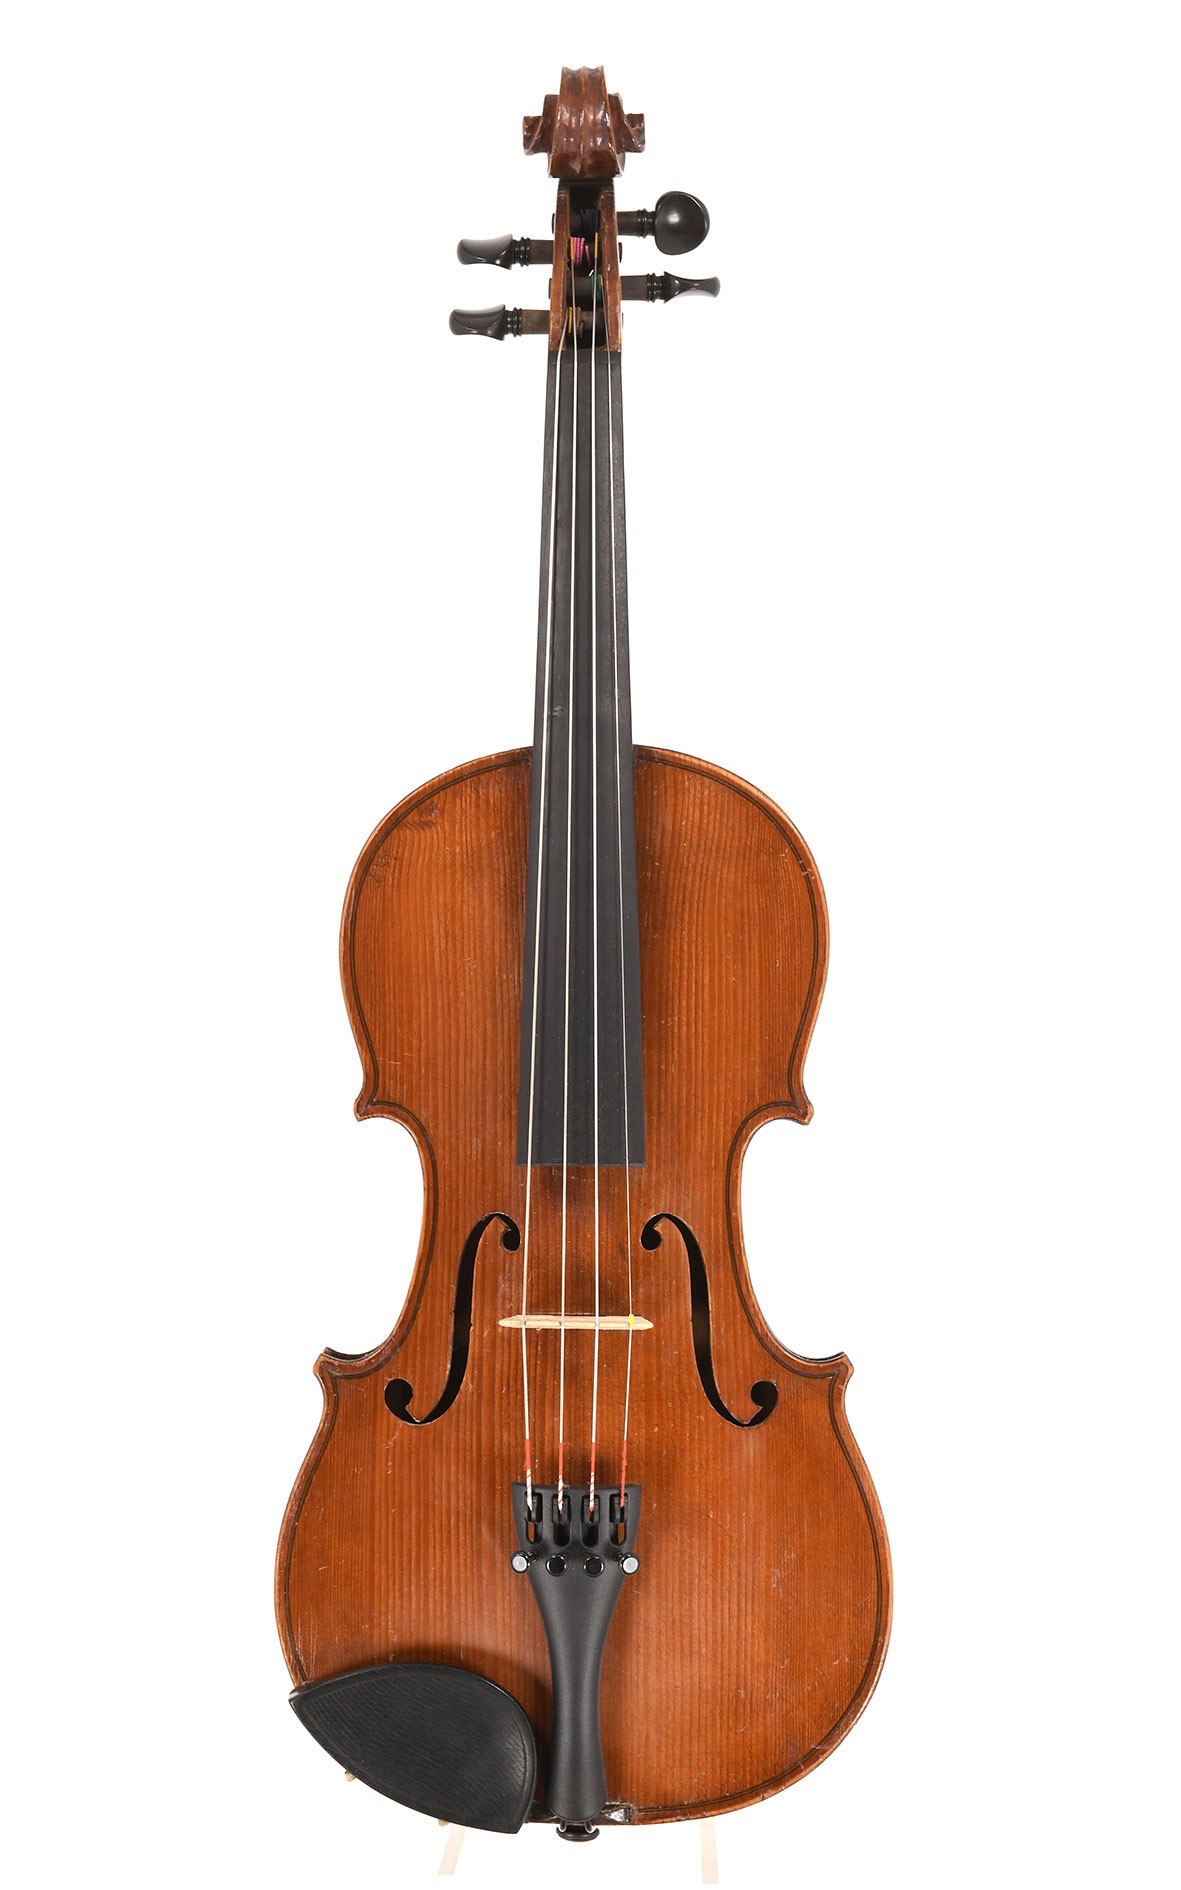 Antique French 3/4 violin by J.T.L., Mirecourt around 1900